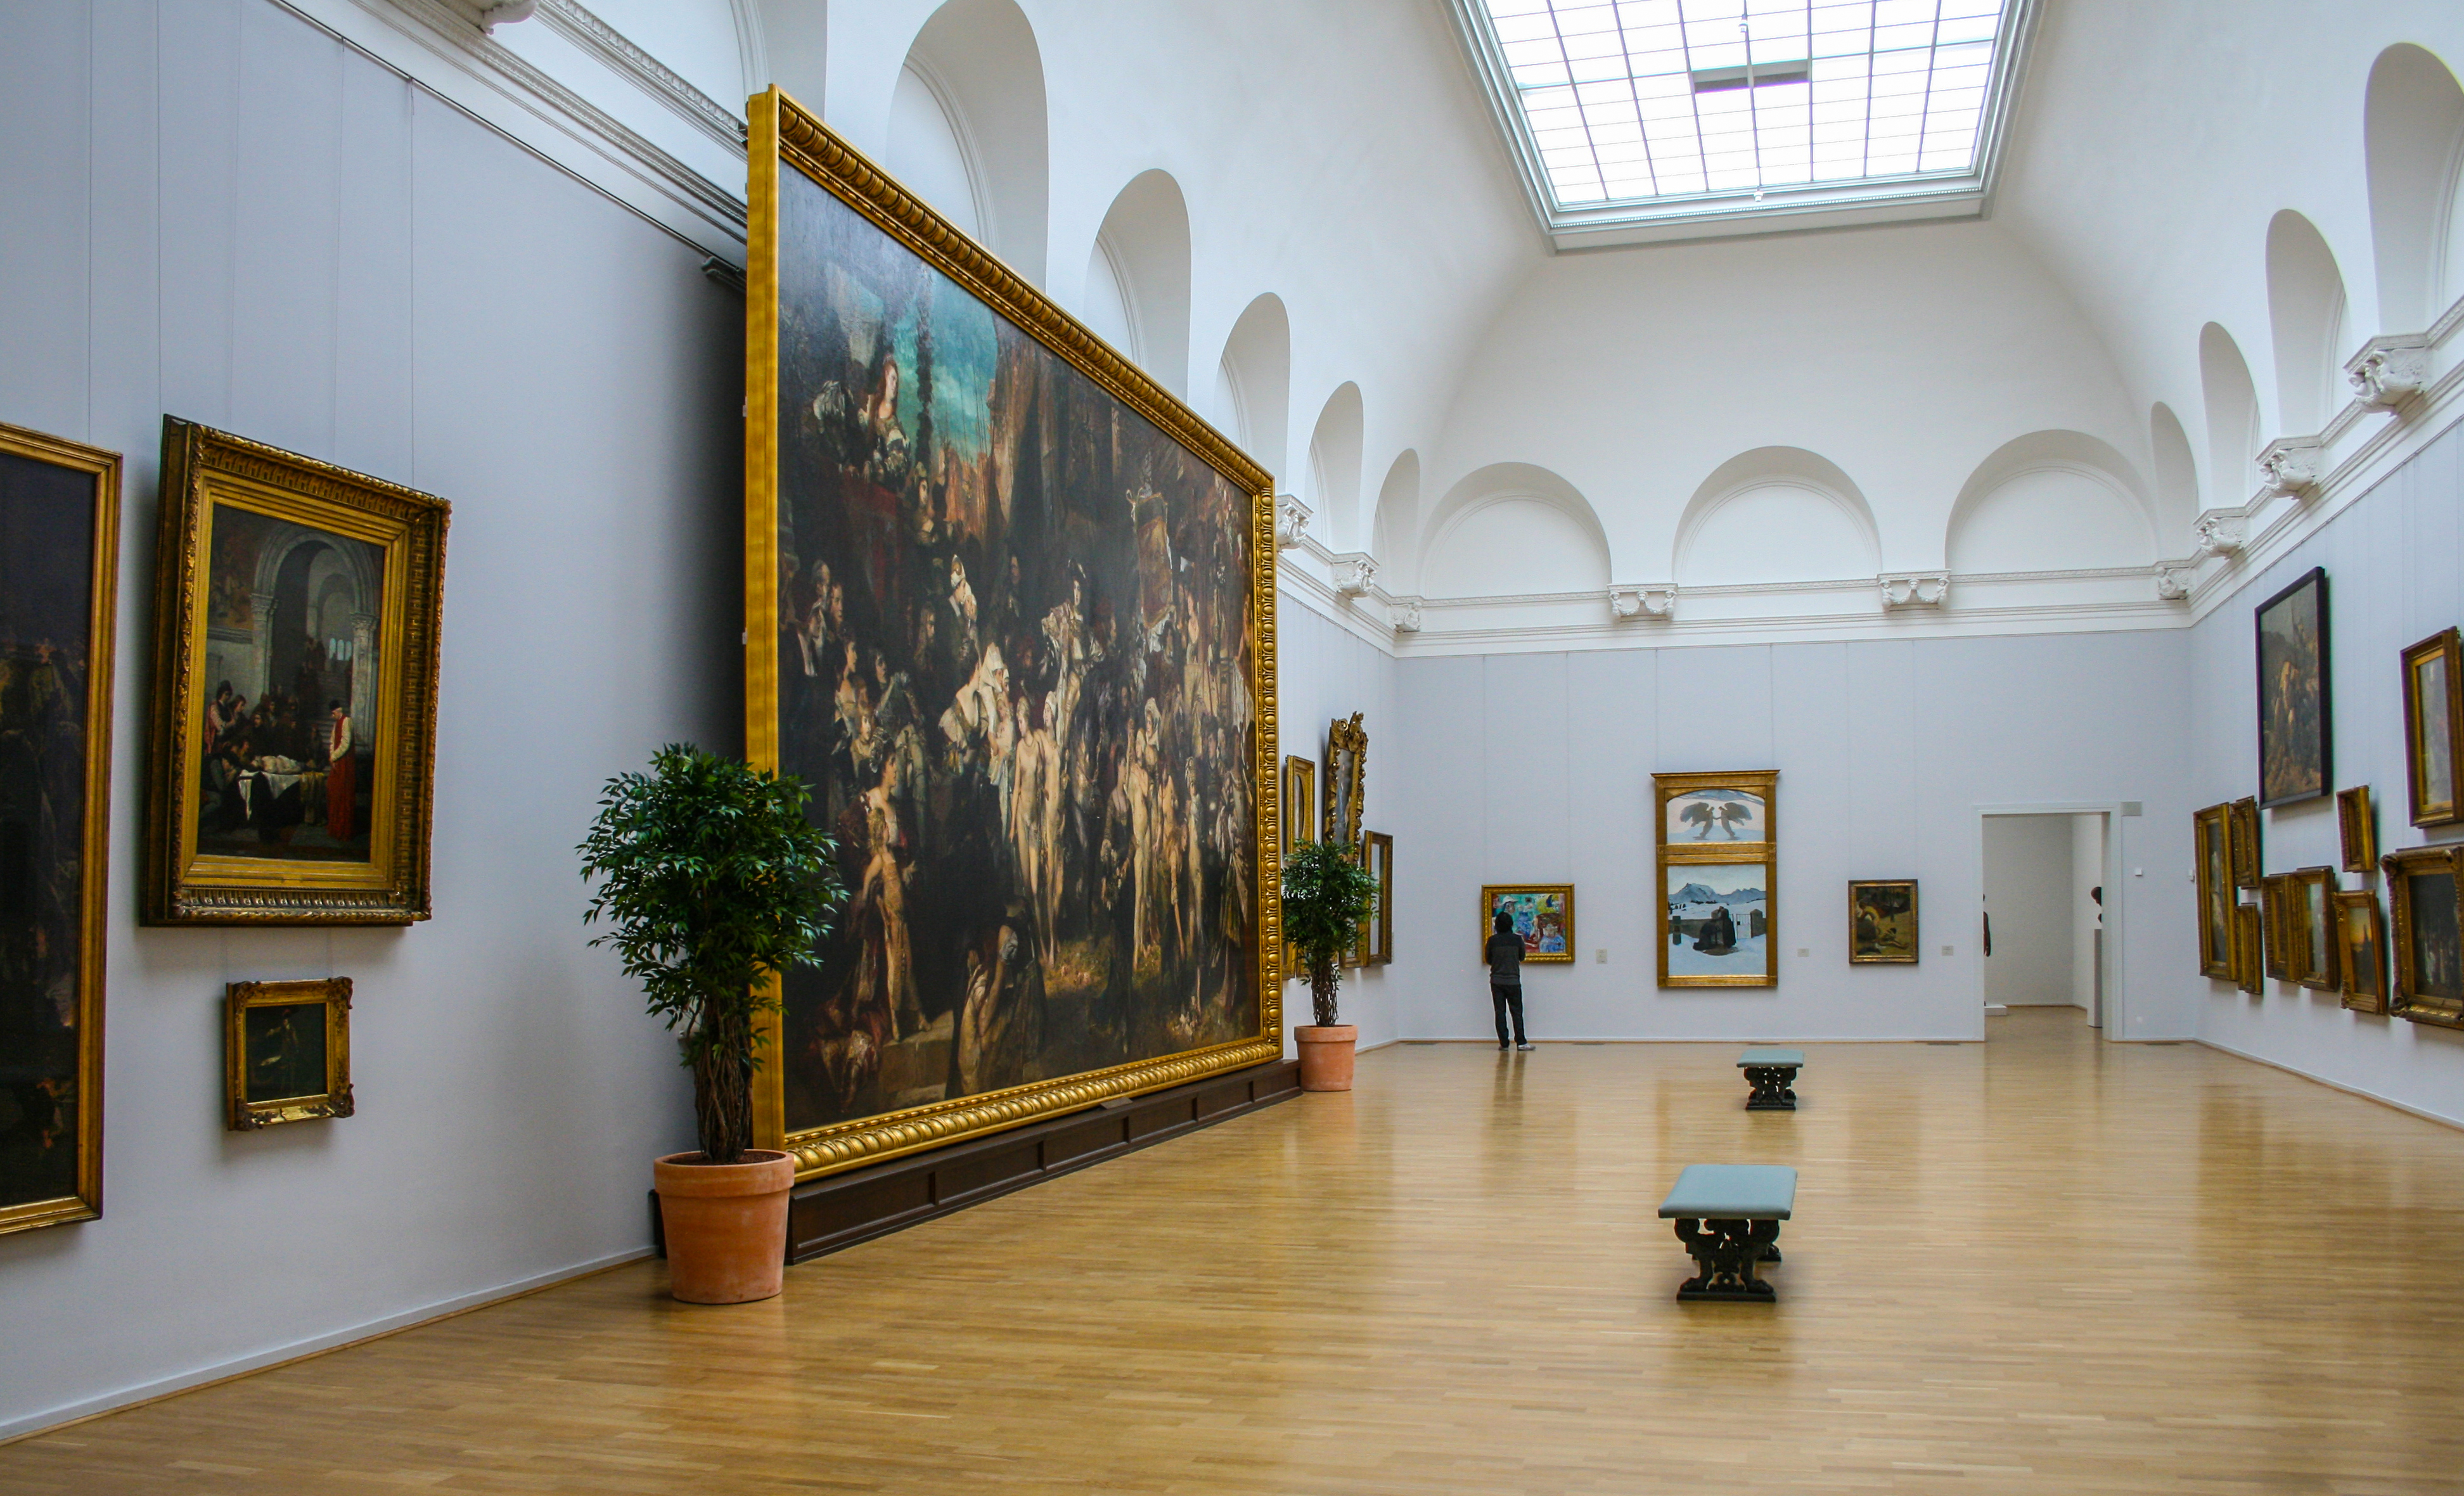 Hamburg Art Gallery in Germany, Europe | Art Galleries - Rated 3.7